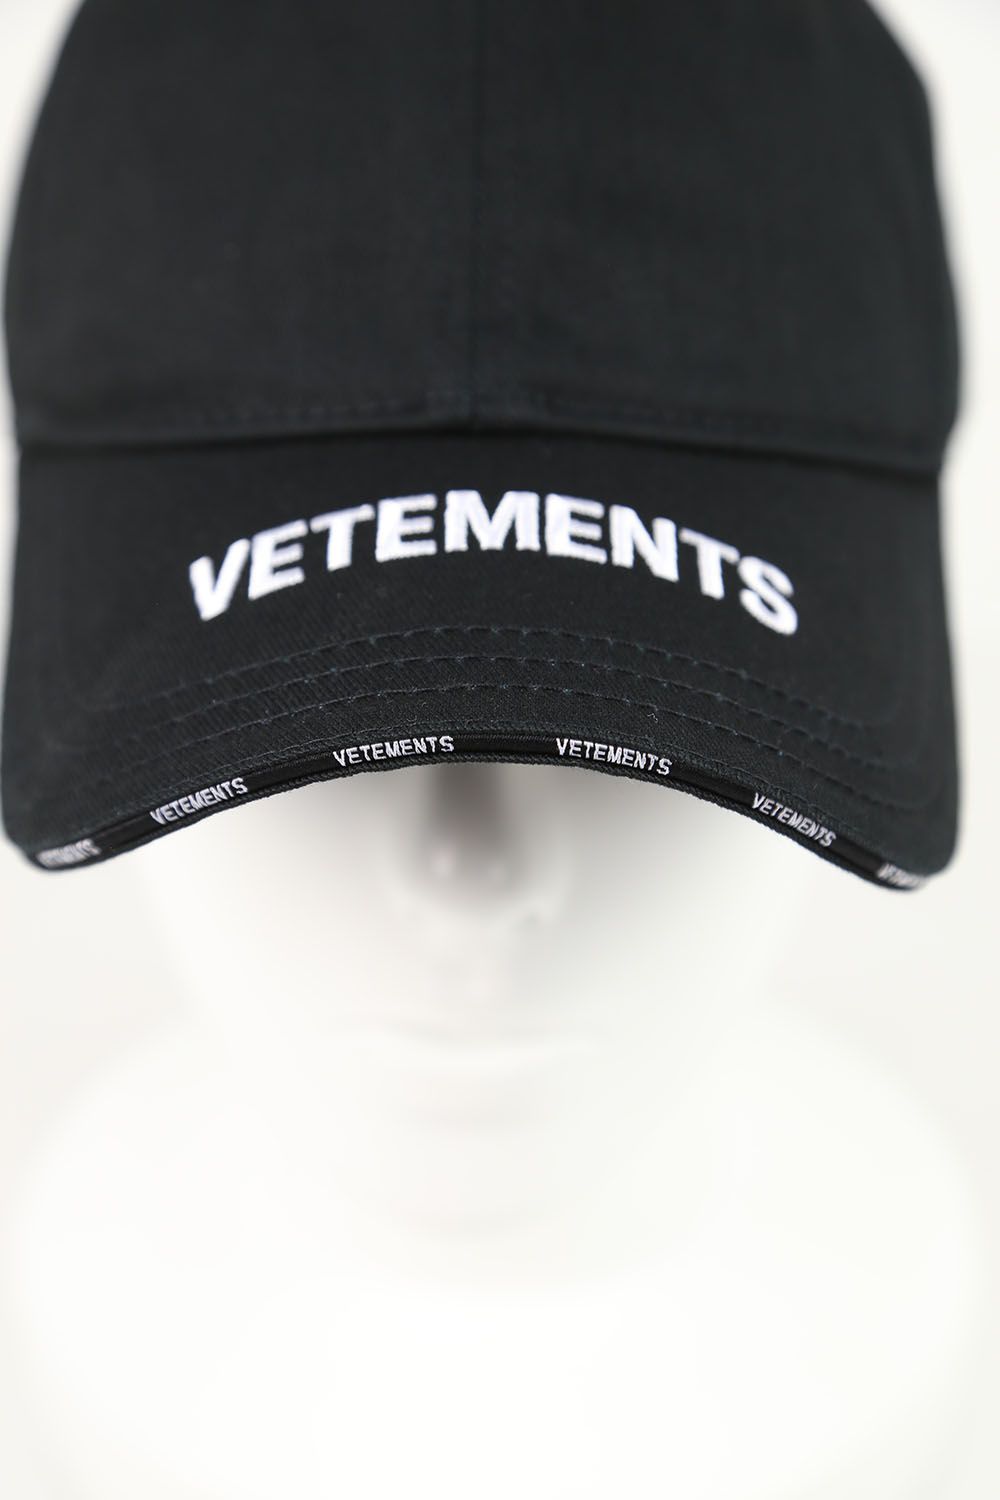 VETEMENTS - FLAT WHITE VETEMENTS CAP / ブラック | Tempt